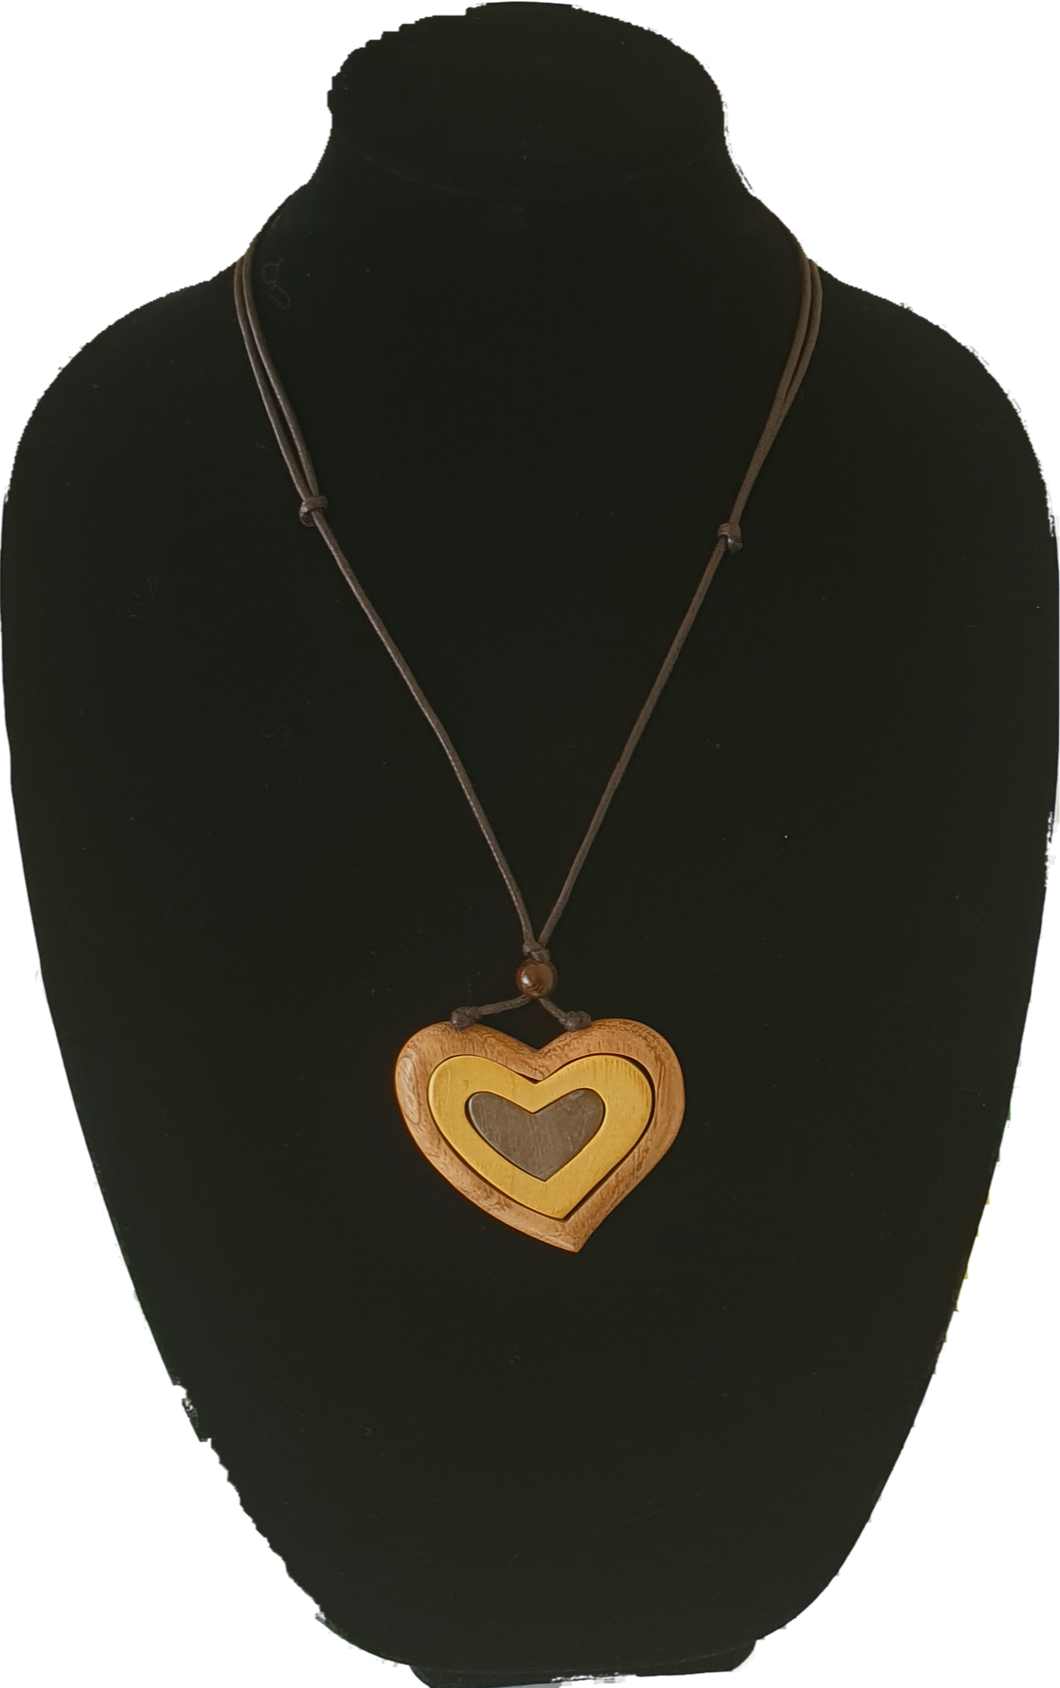 Wooden Hearts Necklace Cinnamon Creations 